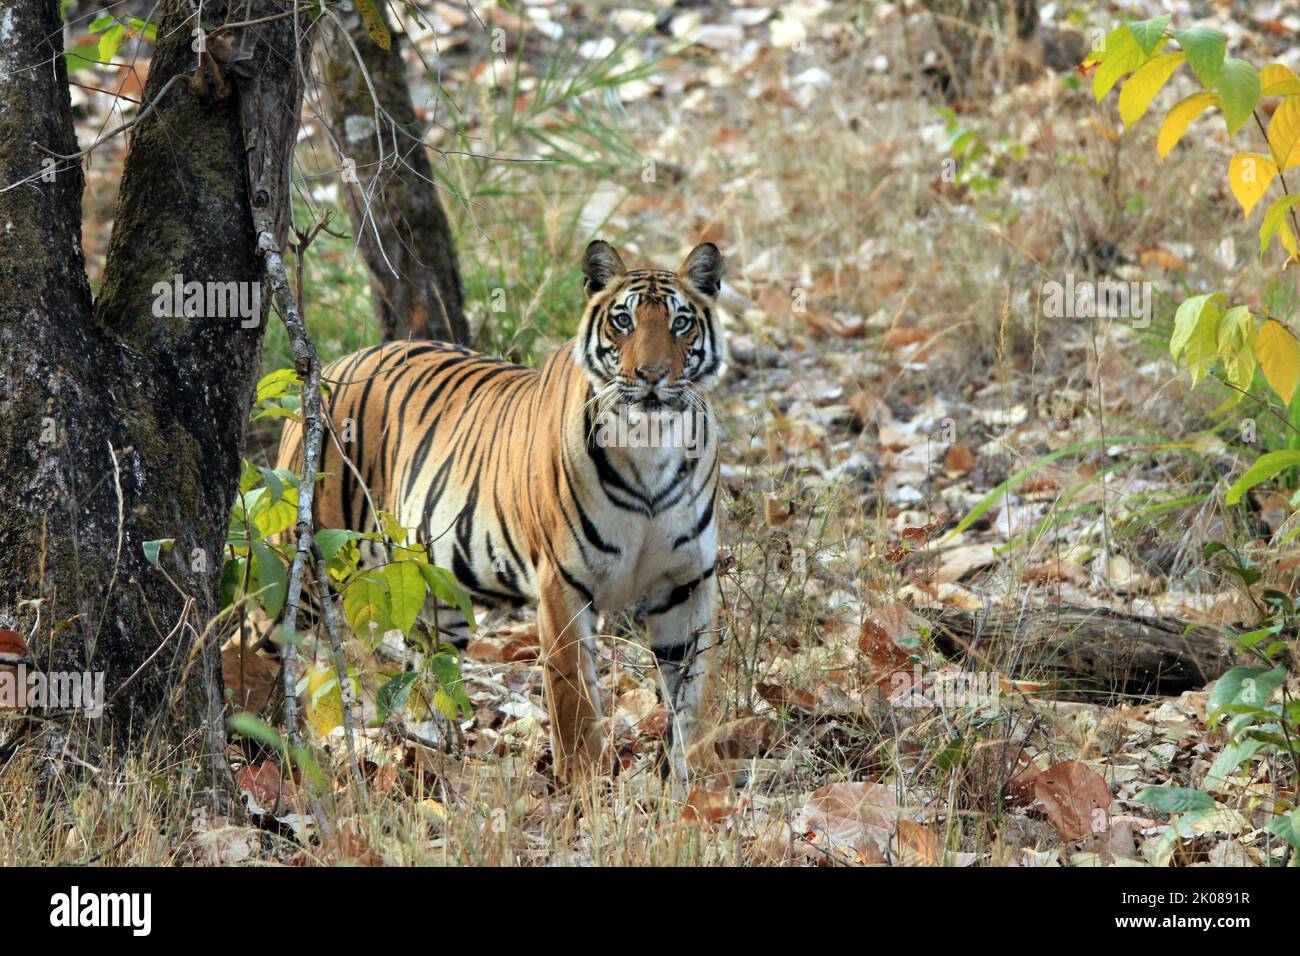 Bengal Tiger (Panthera tigris tigris) in the Wild, Looking into the Camera. Bandhavgarh, India Stock Photo